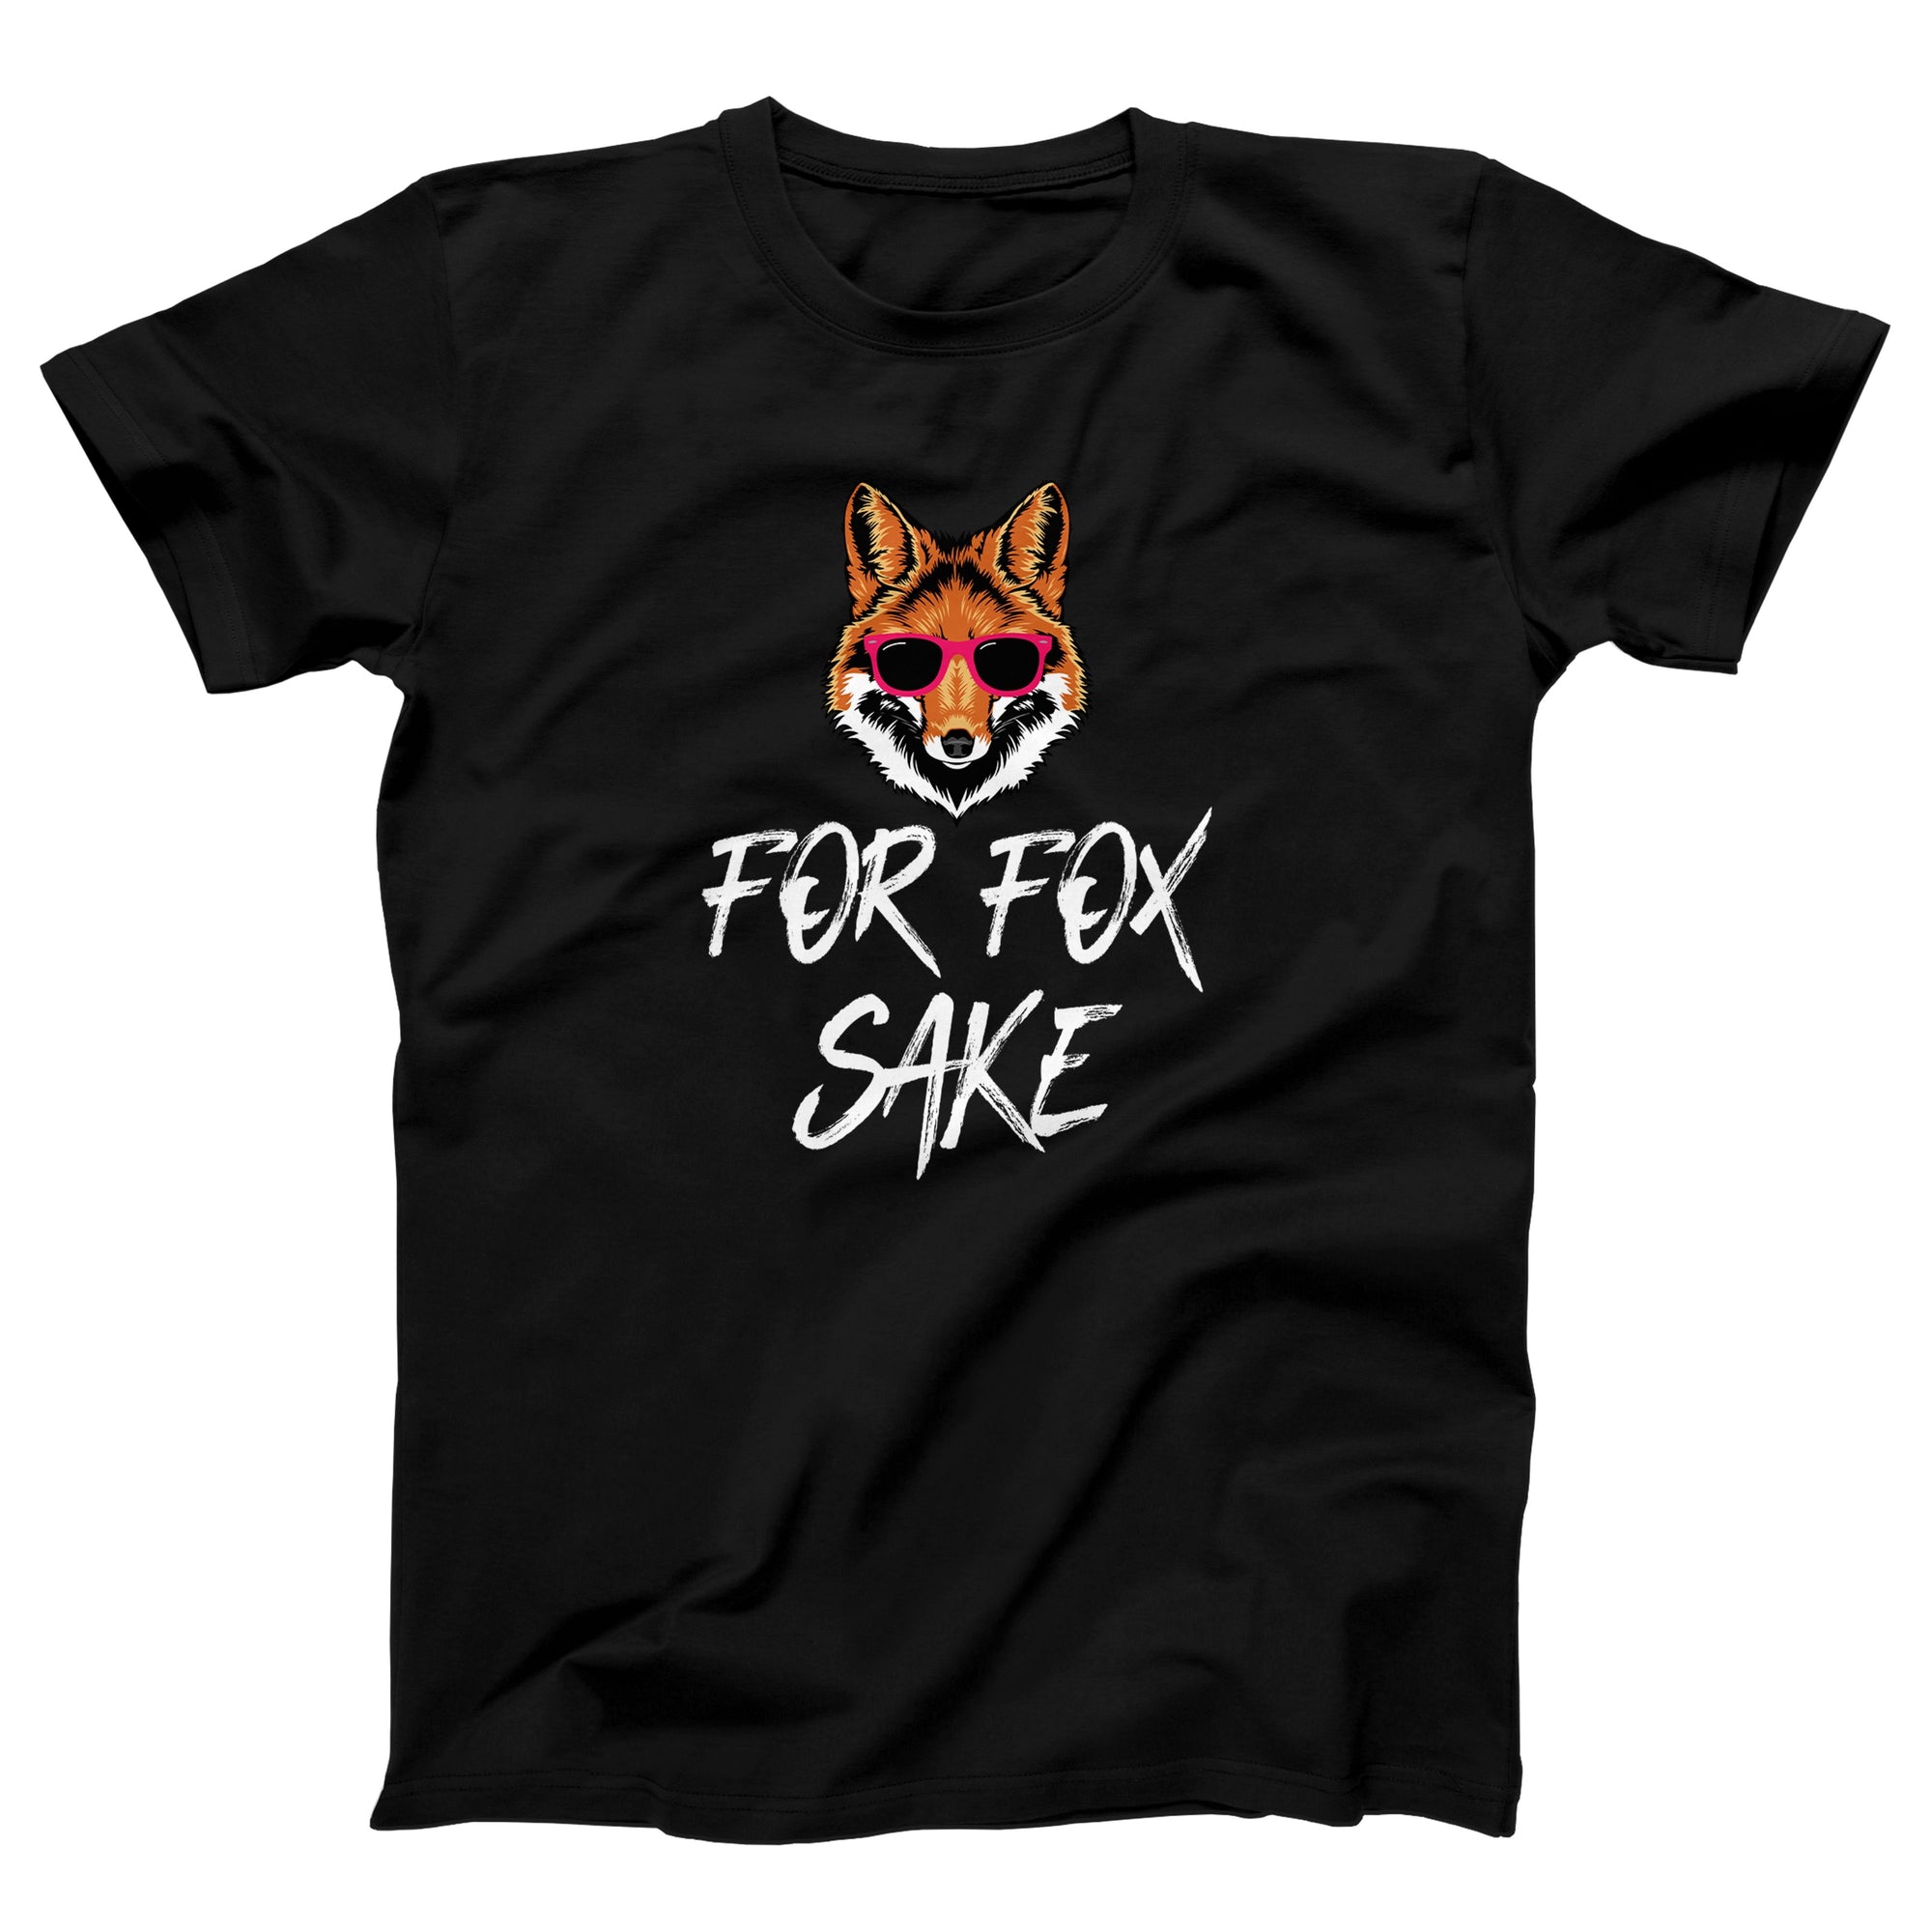 For Fox Sake Adult Unisex T-Shirt - anishphilip